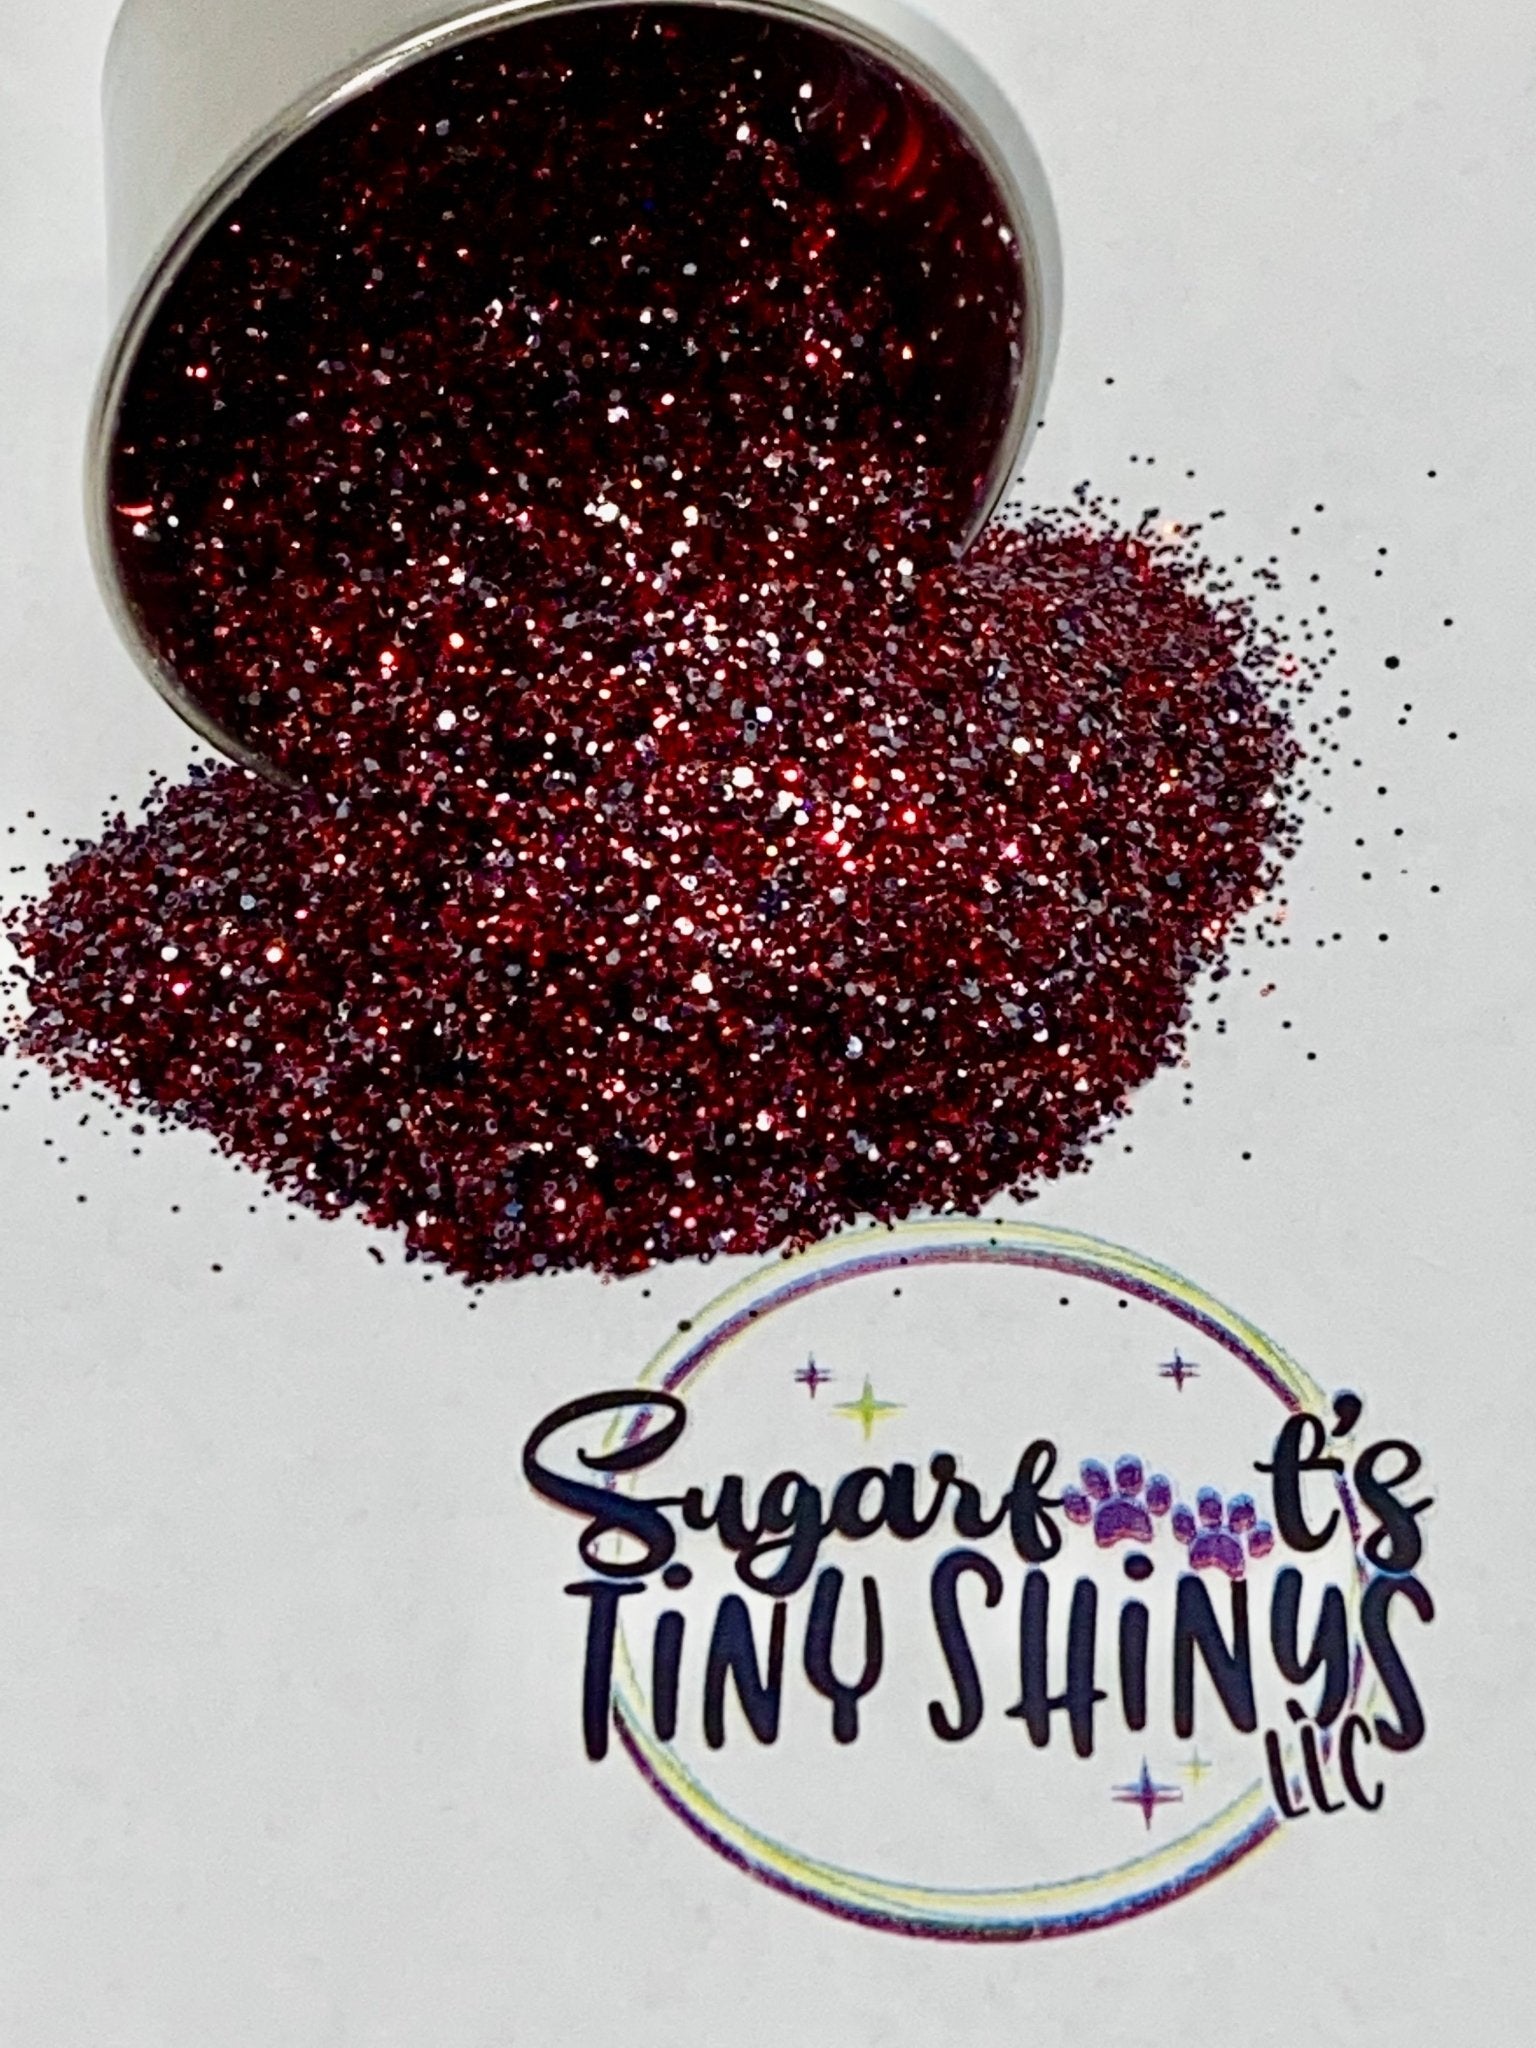 Dragon's Blood - Sugarfoot's Tiny Shinys, LLC